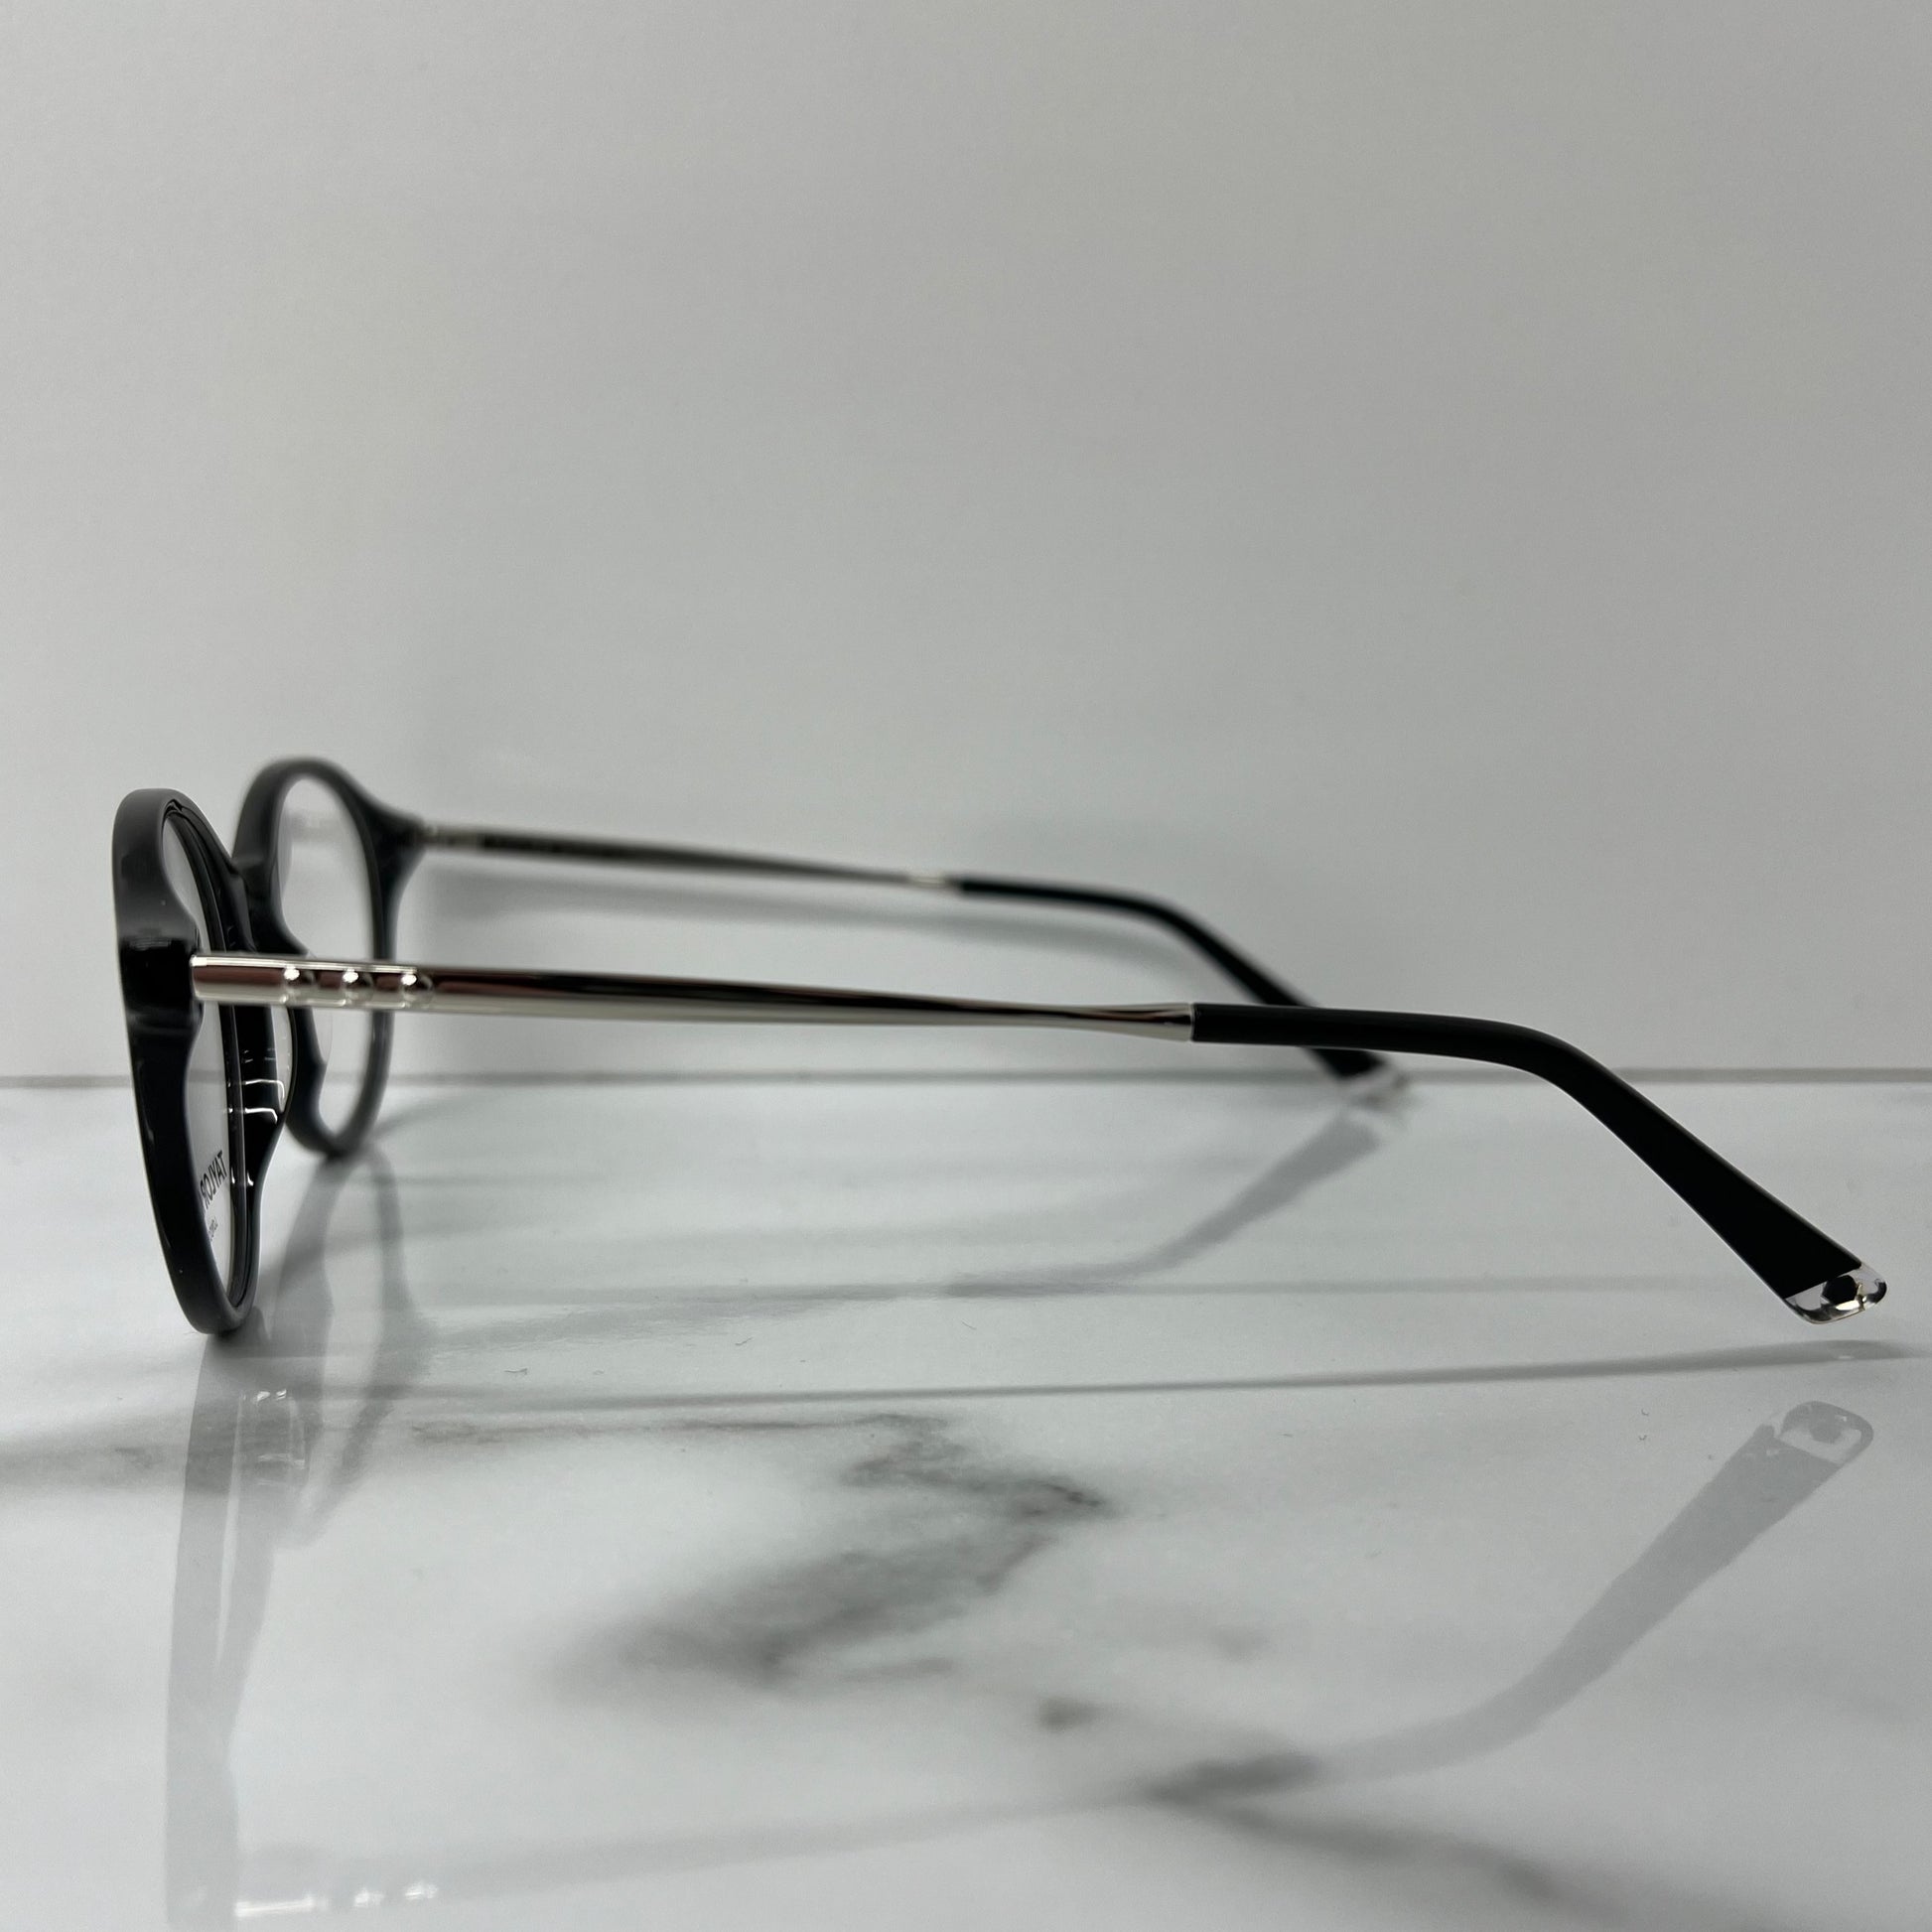 Taylor Morris W1 C1 Prescription Optical Glasses